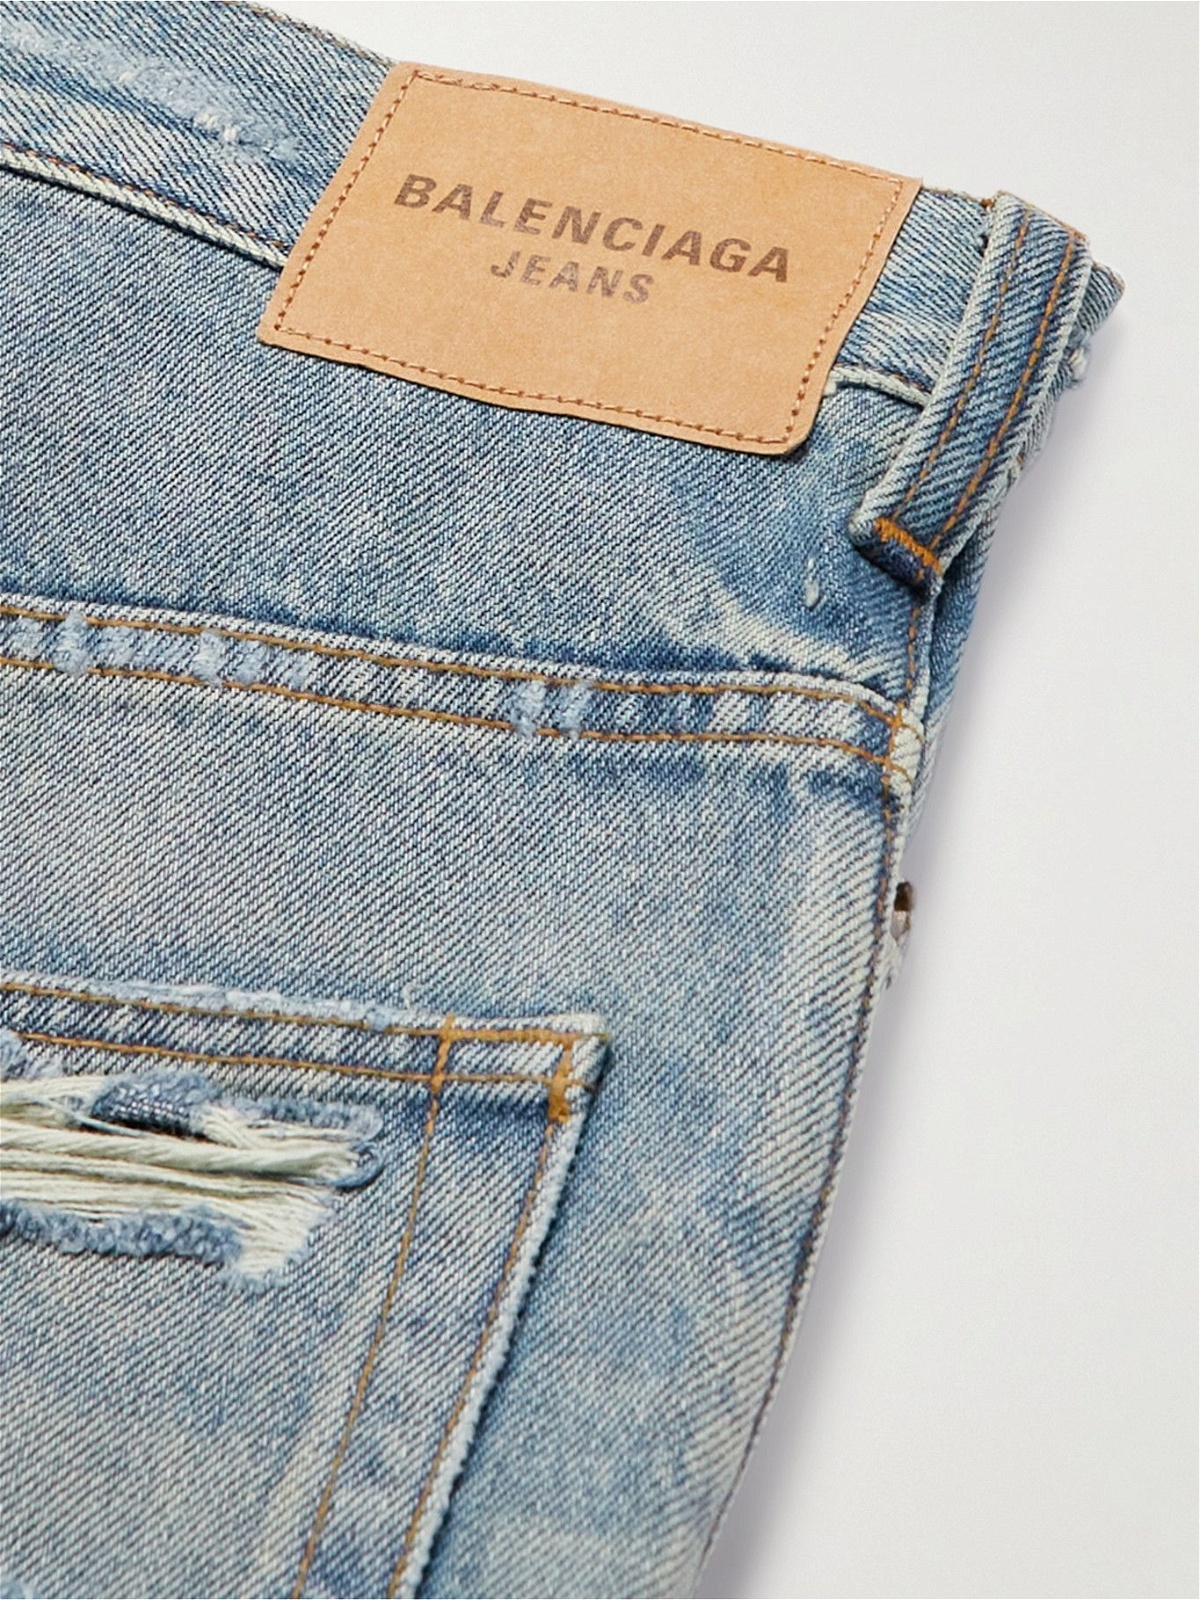 Balenciaga Outlet wide jeans in used denim  Denim  Balenciaga jeans  641548 TJW47 online on GIGLIOCOM